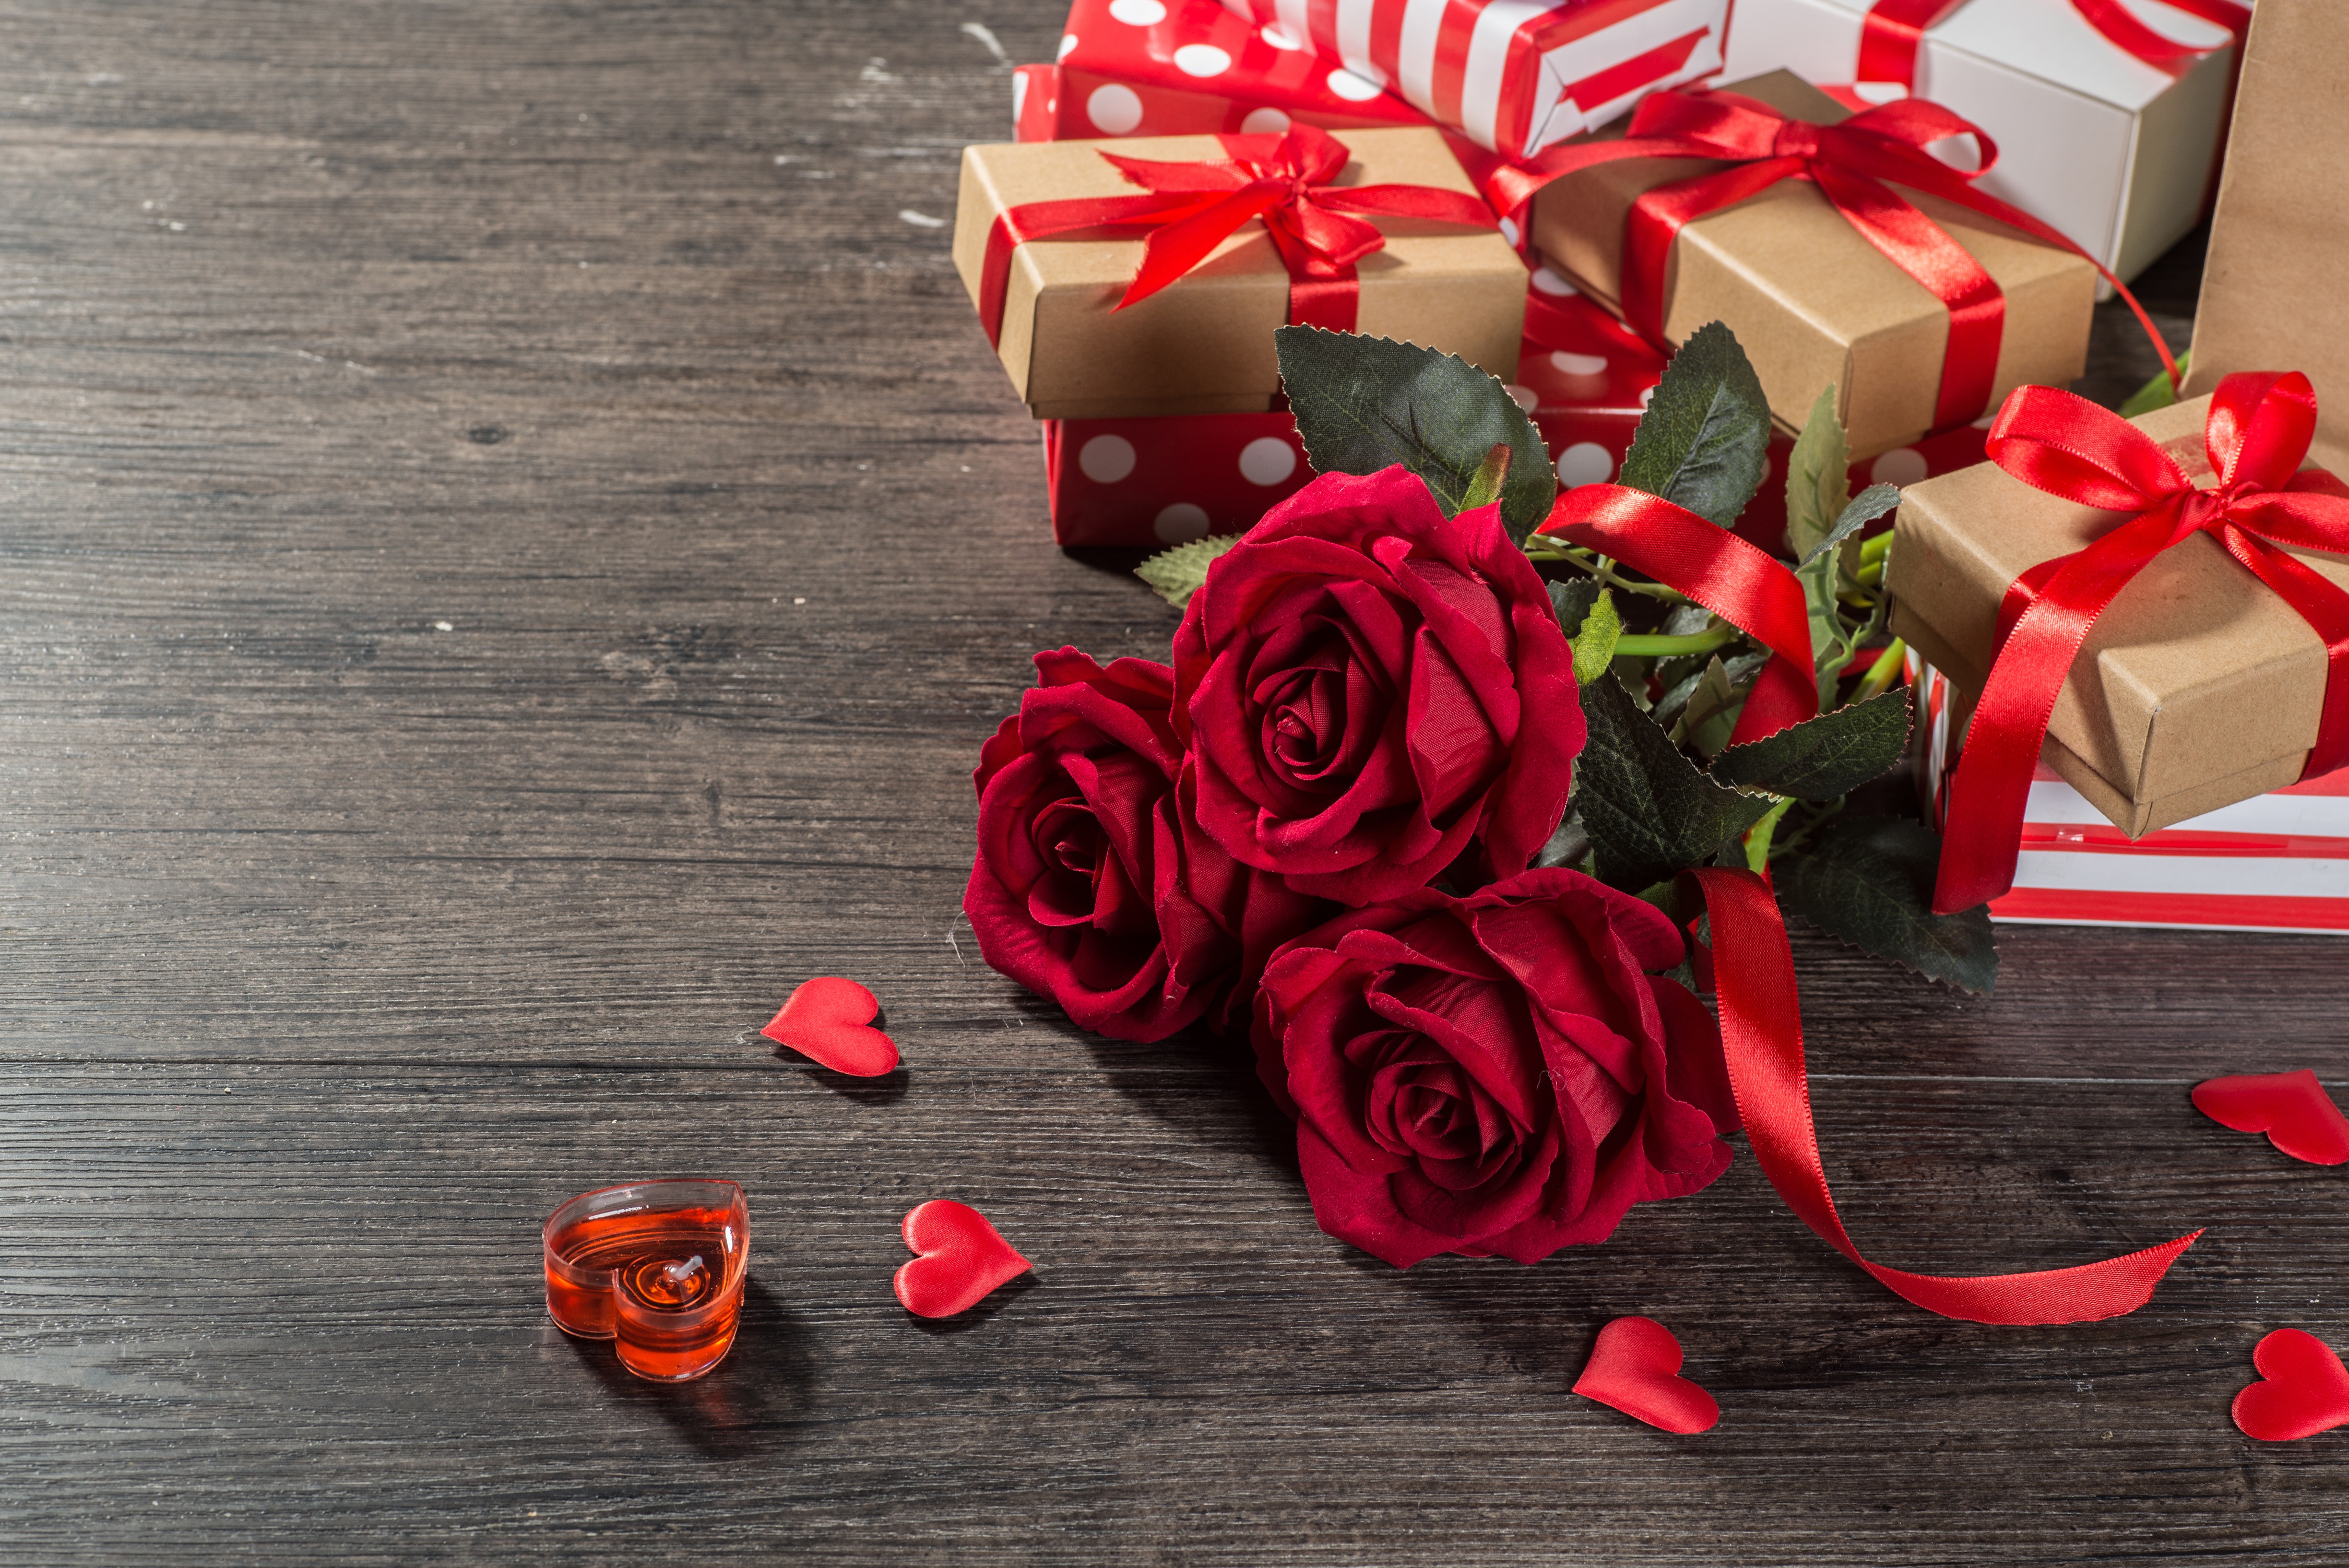 Flower Gift Heart Love Romantic Rose Valentine 039 S Day 4500x3004